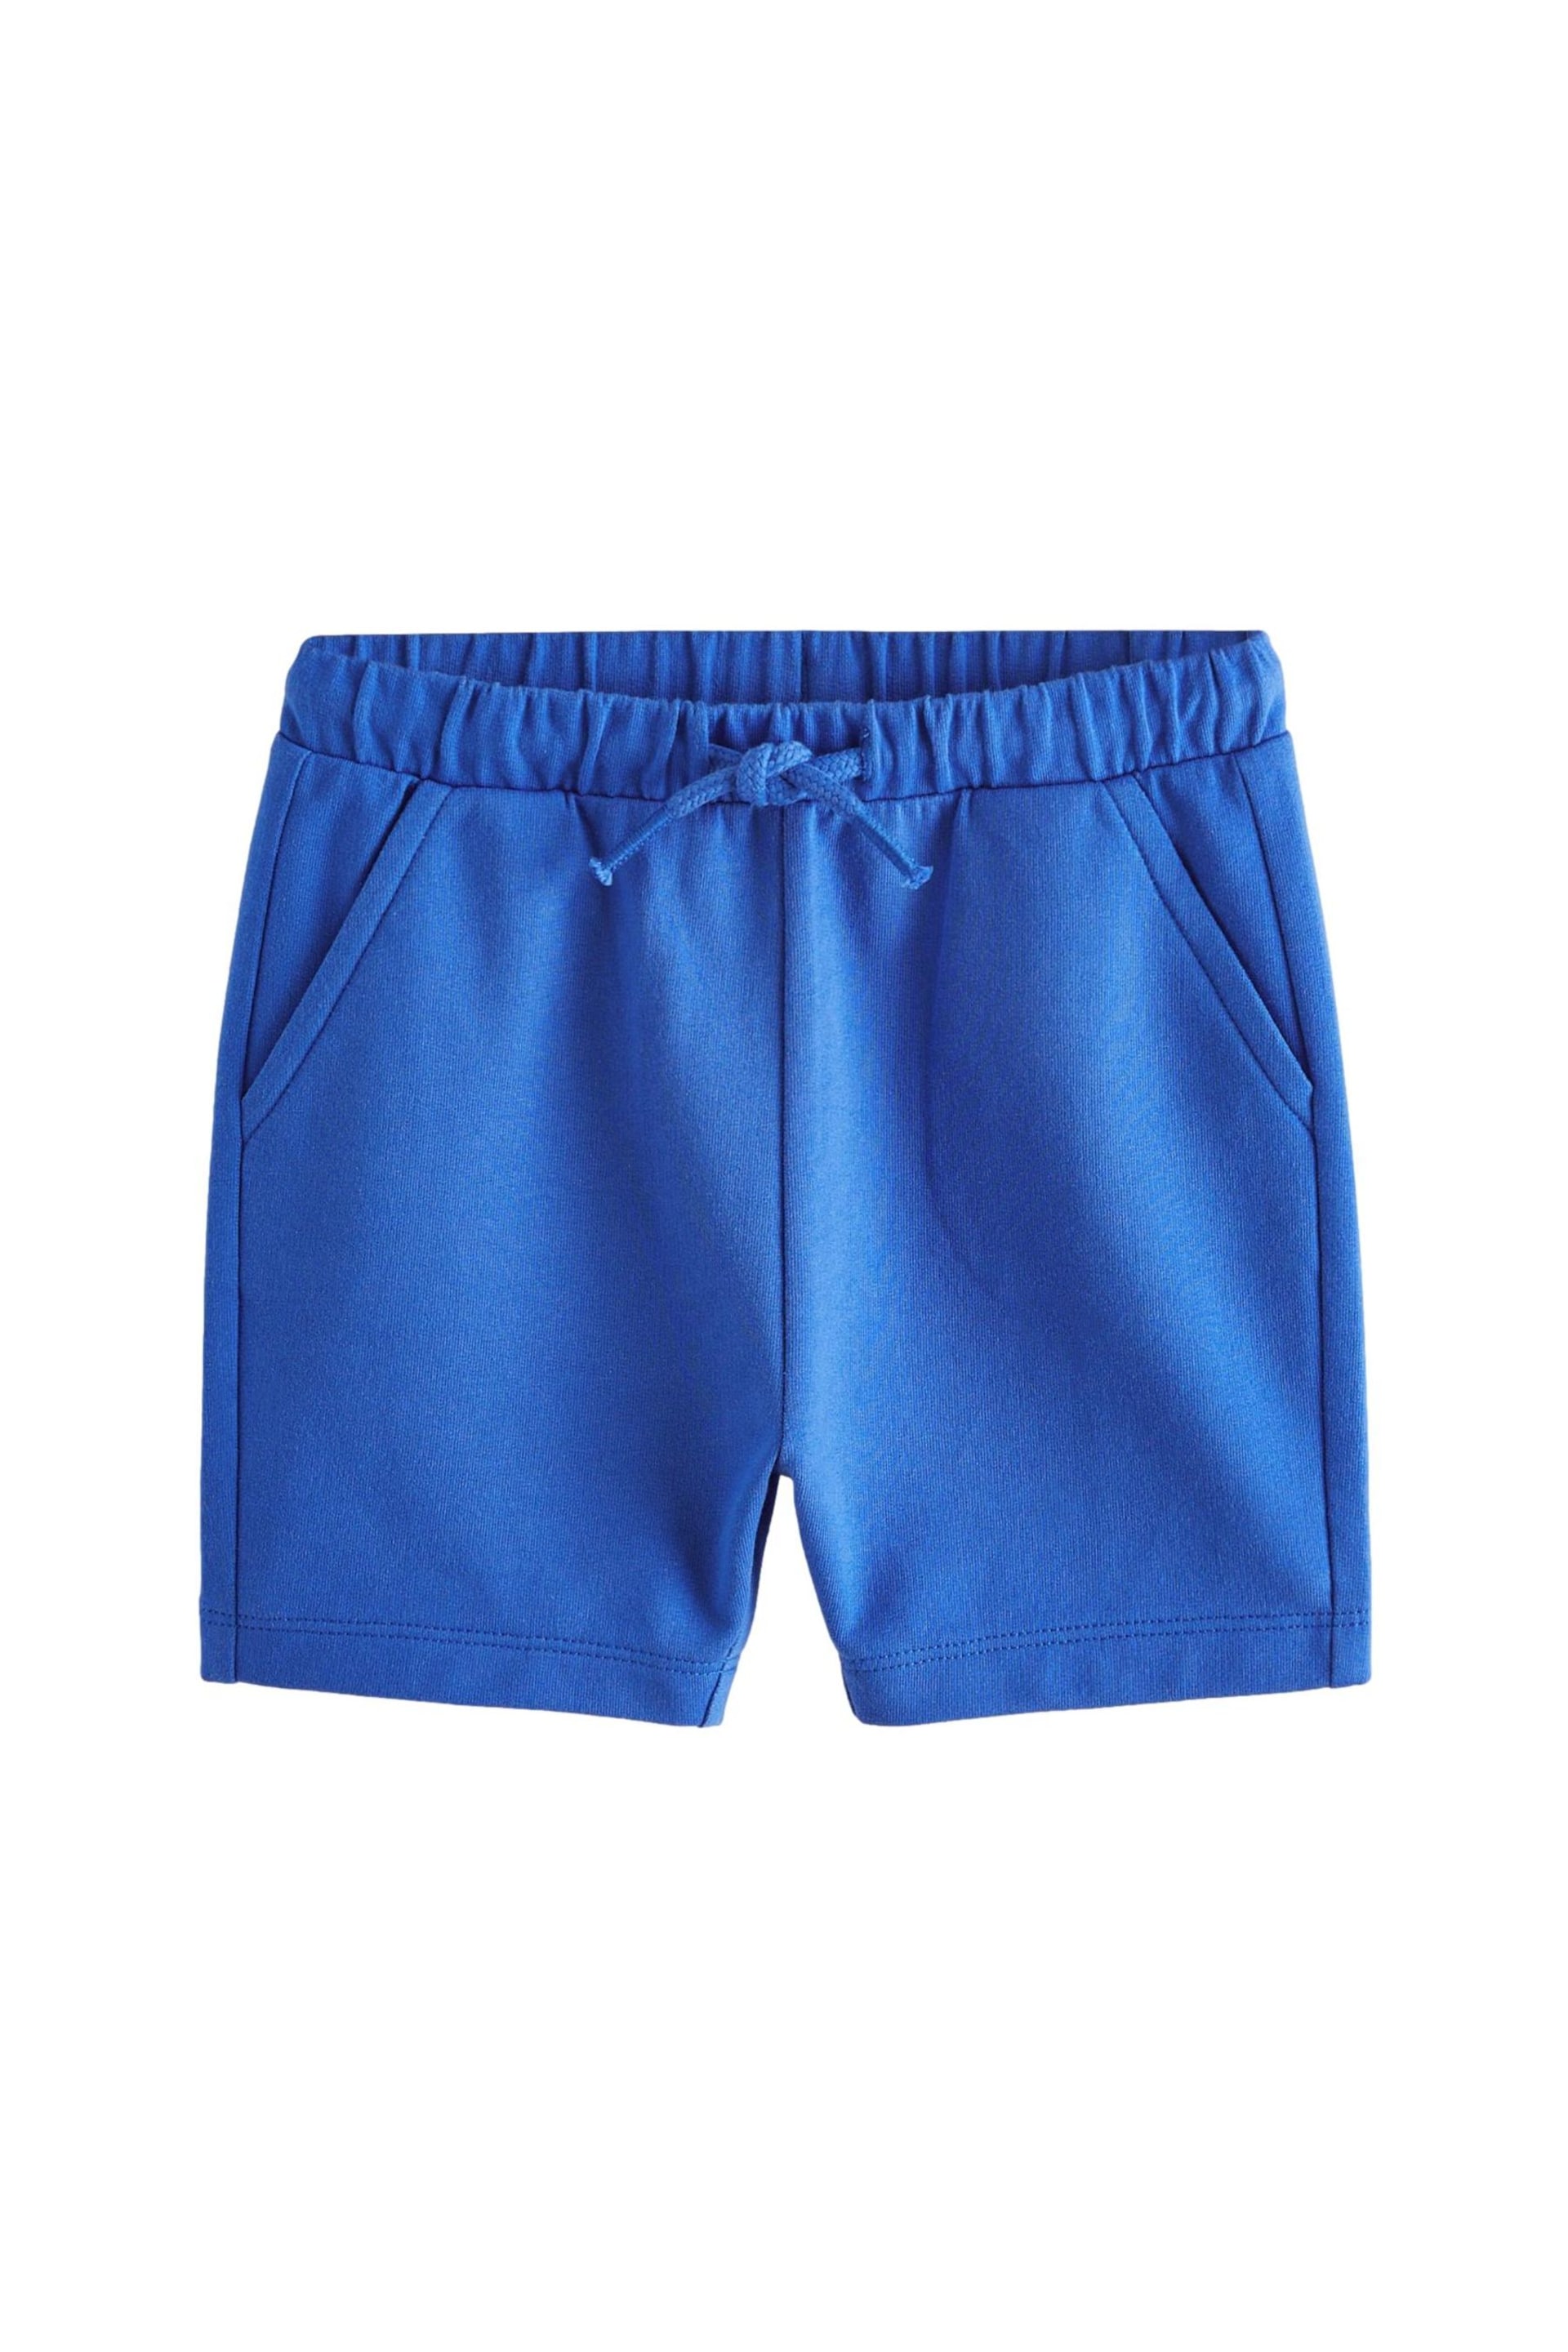 Cobalt Blue Jersey Shorts (3mths-7yrs) - Image 1 of 3